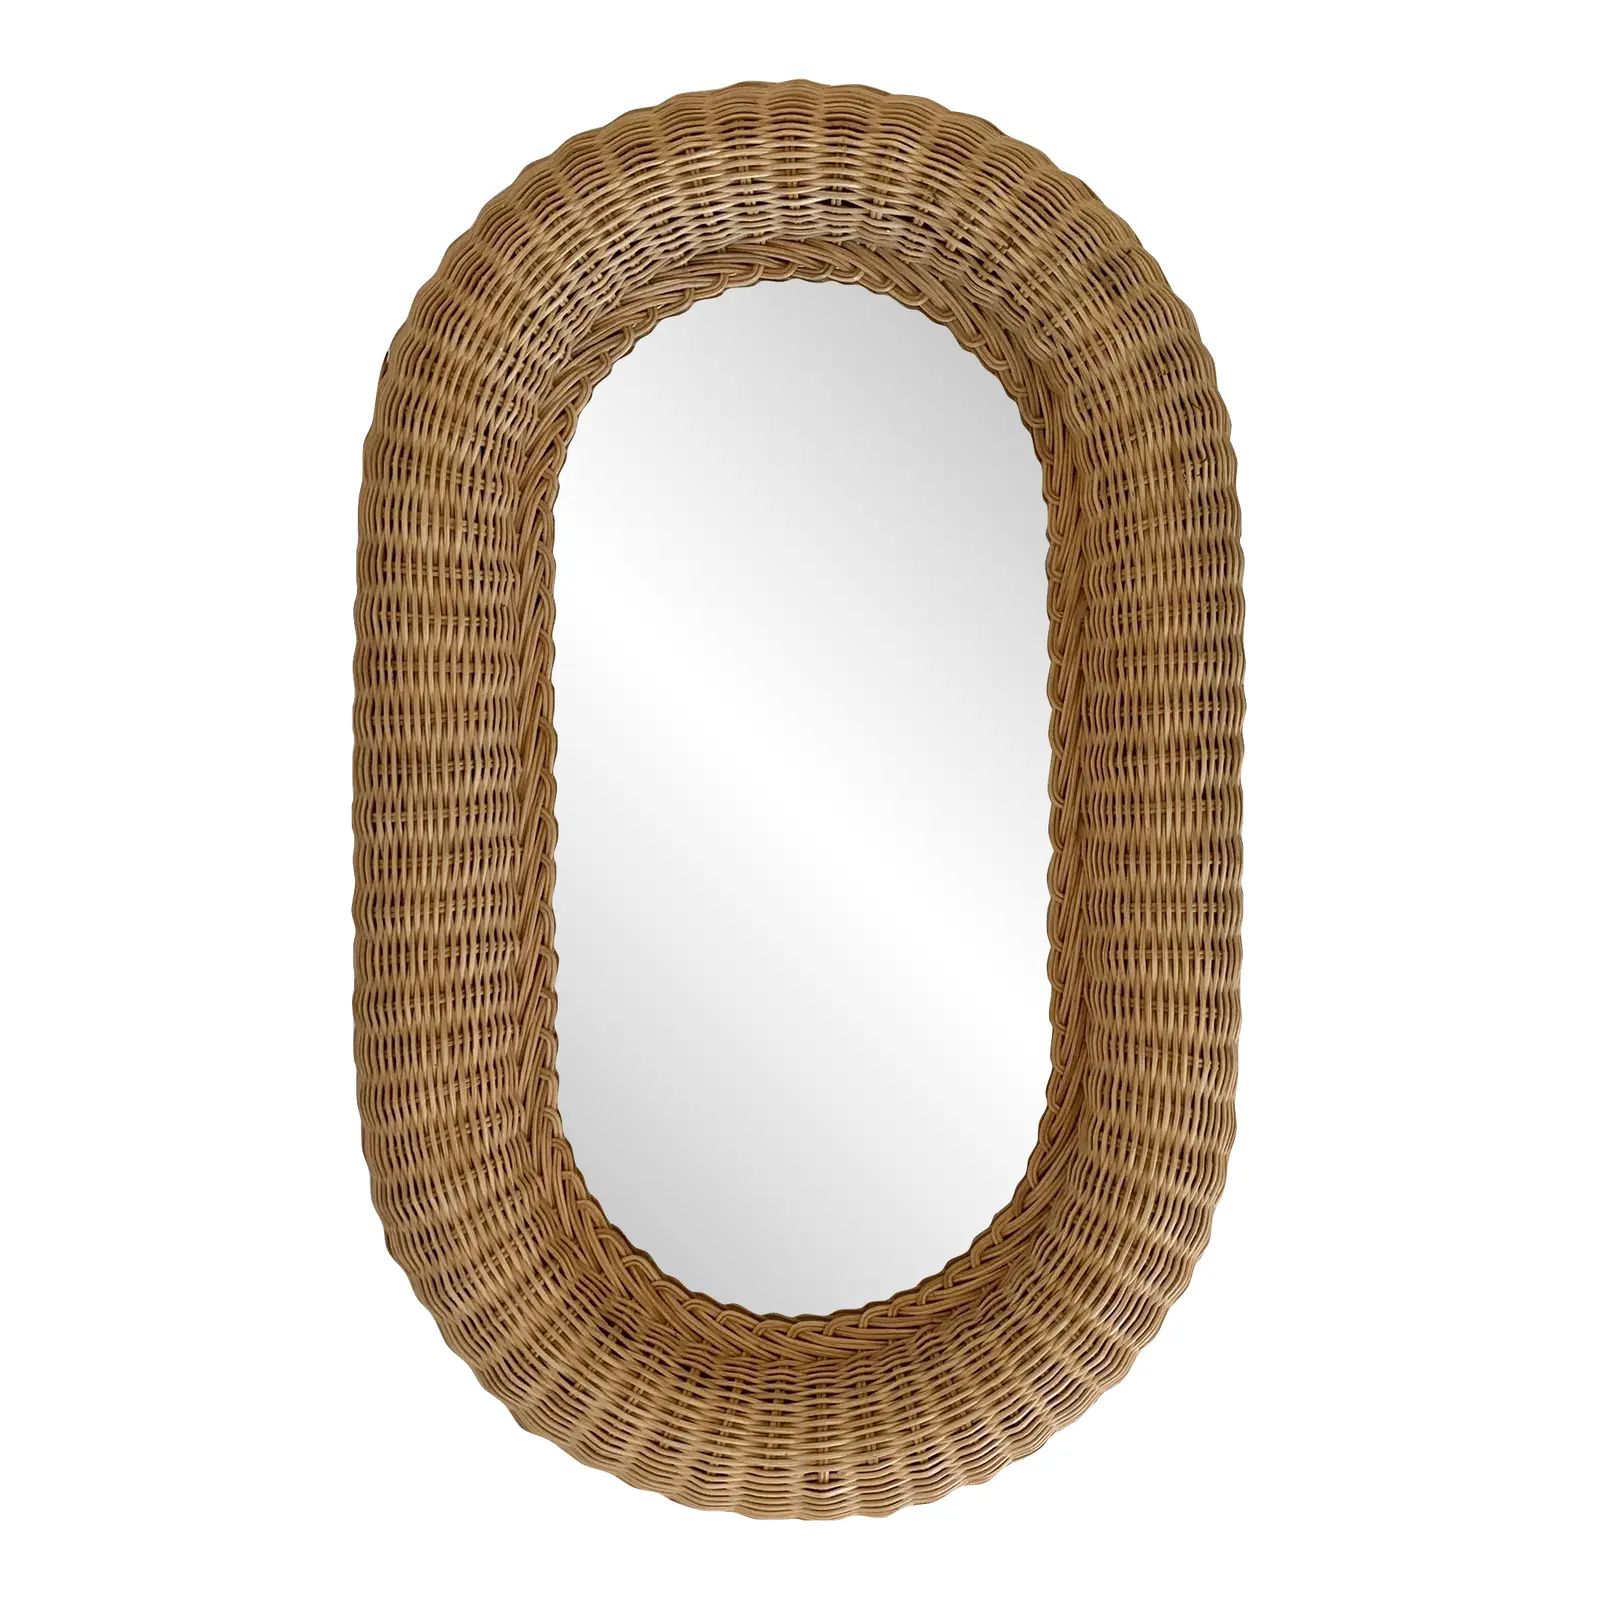 Late 20th Century Boho Wicker Oval Wall Mirror | Chairish